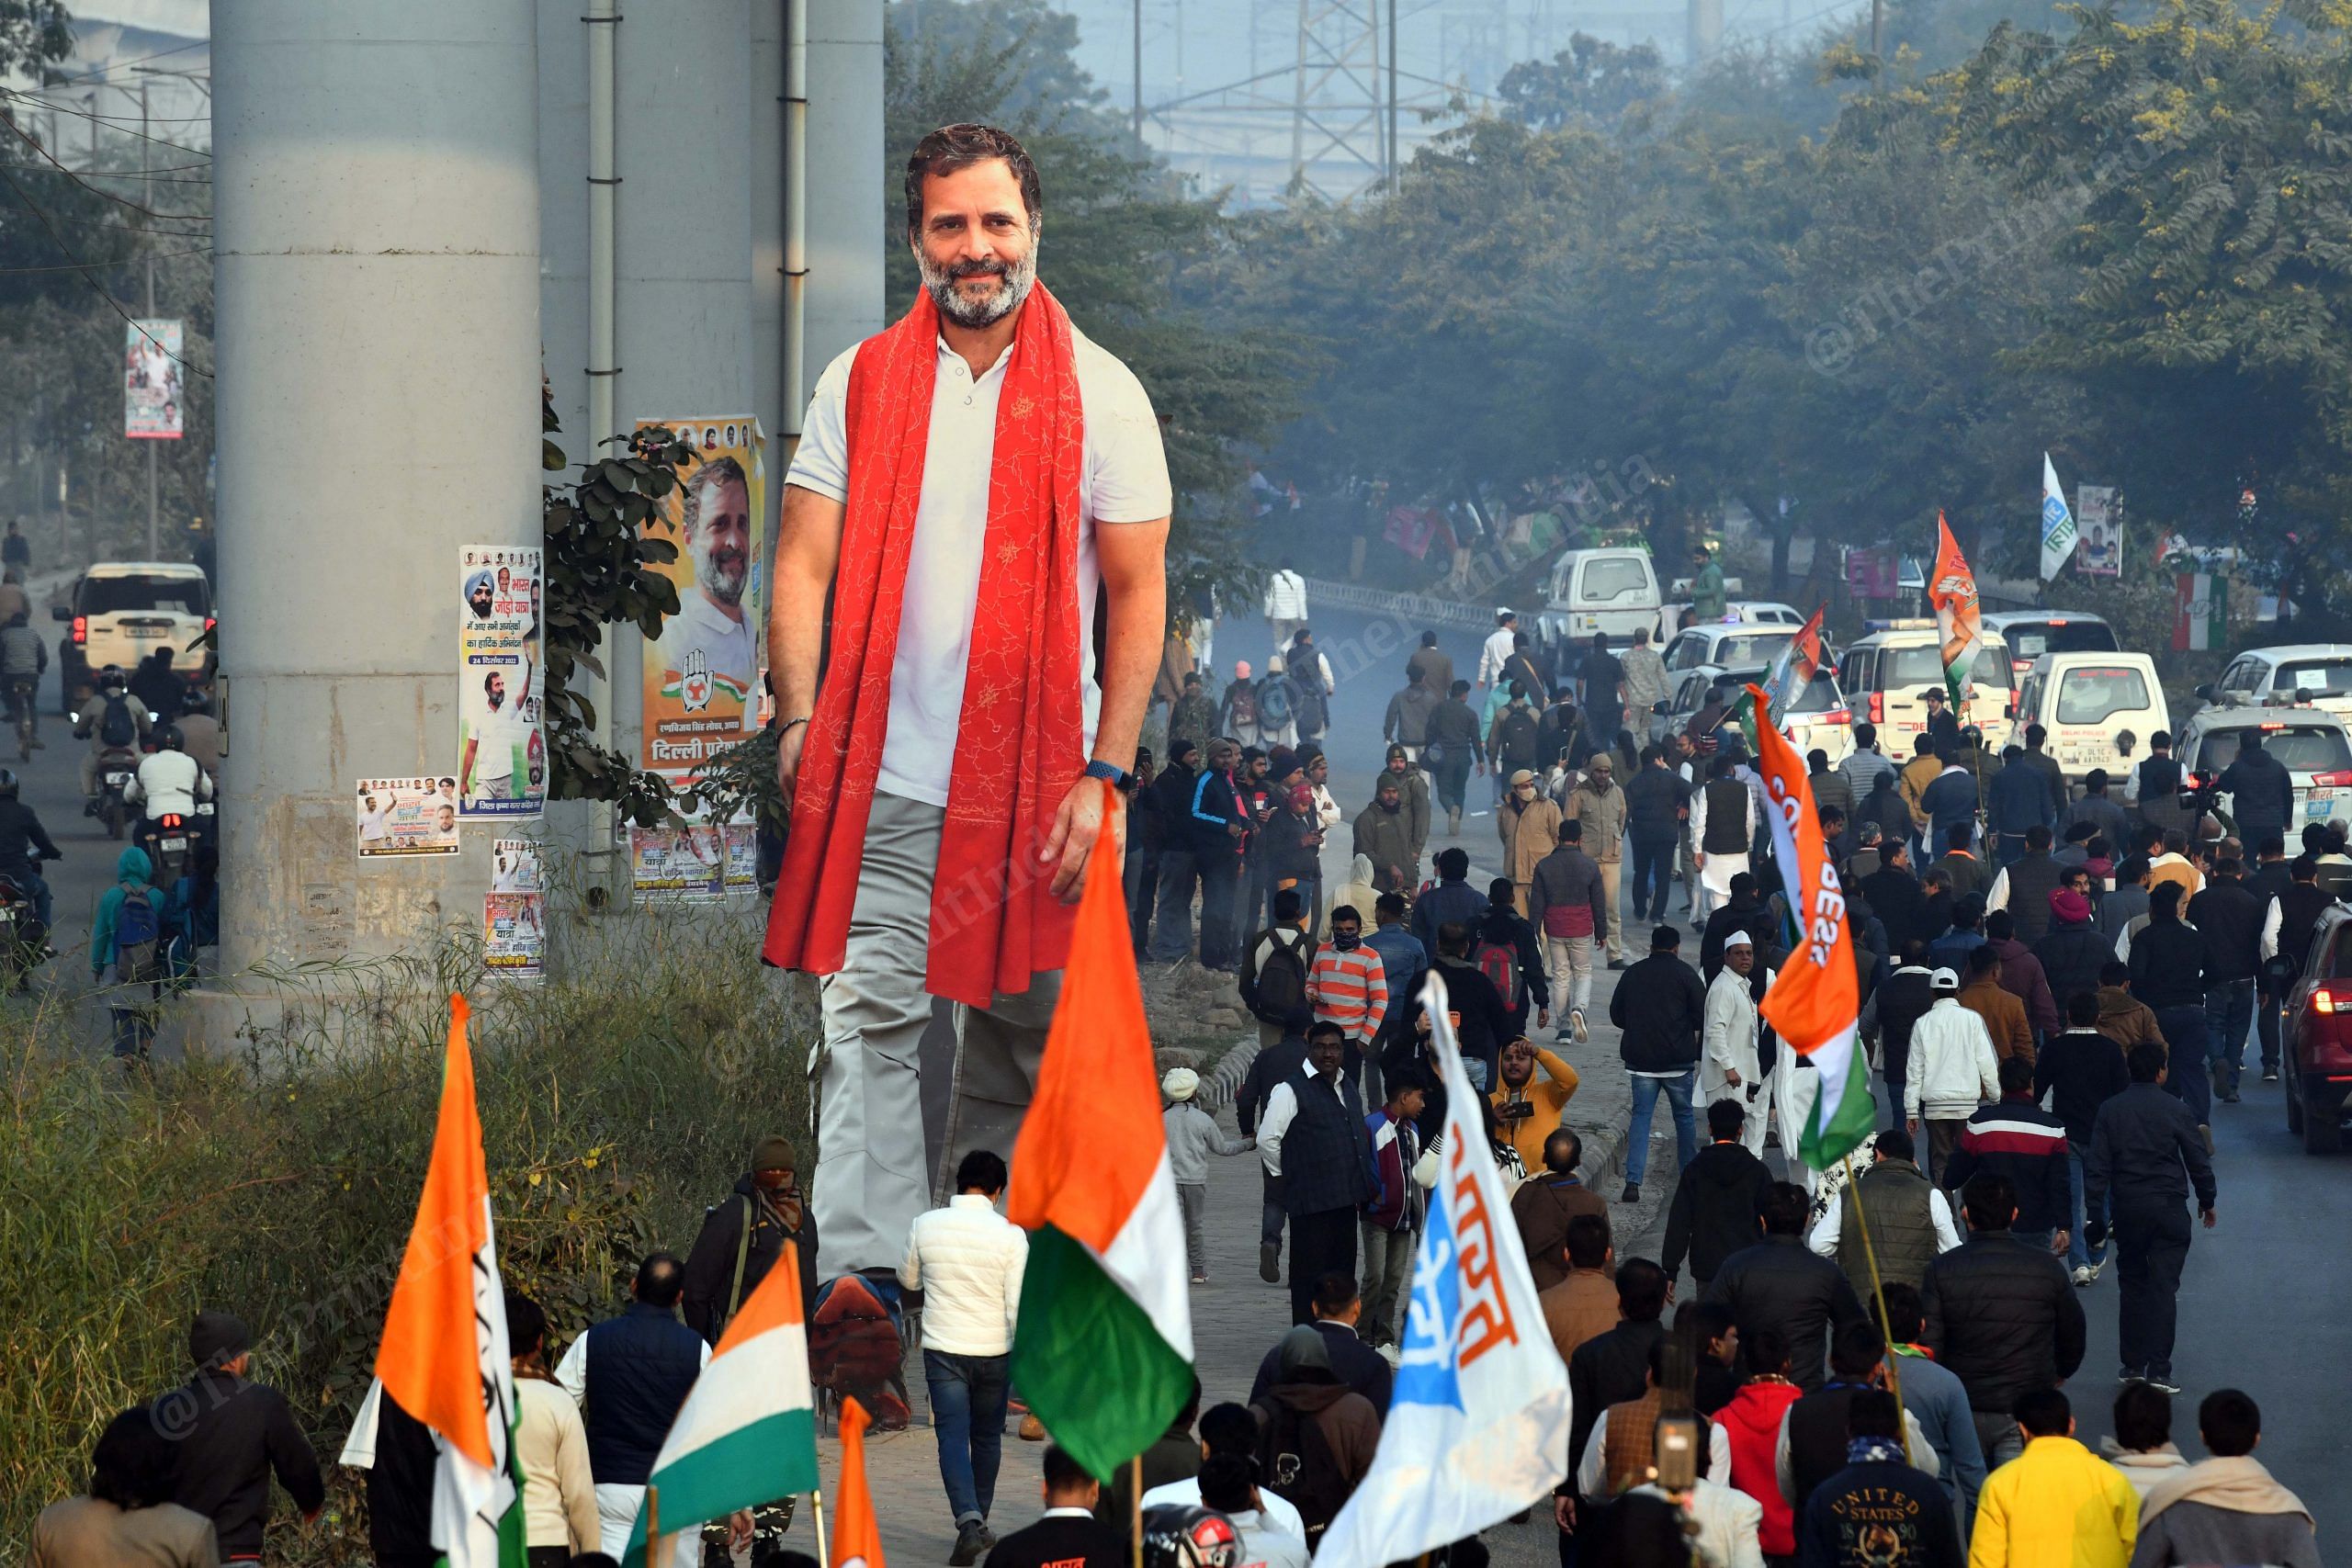 Congress supporters at the Delhi leg of the Bharat Jodo Yatra | Photo: Suraj Singh Bisht | ThePrint